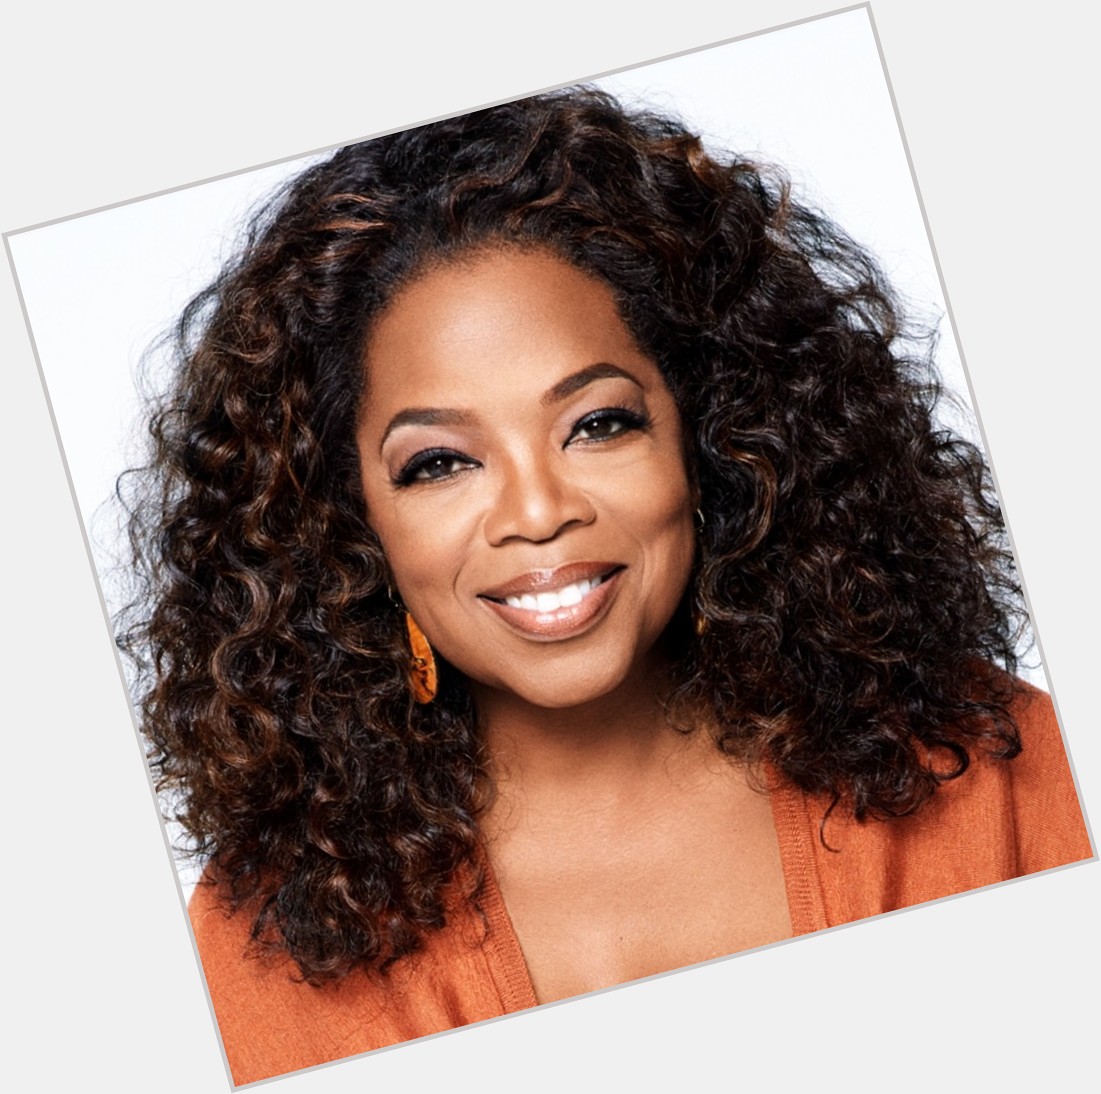  Happy birthday Oprah Winfrey  